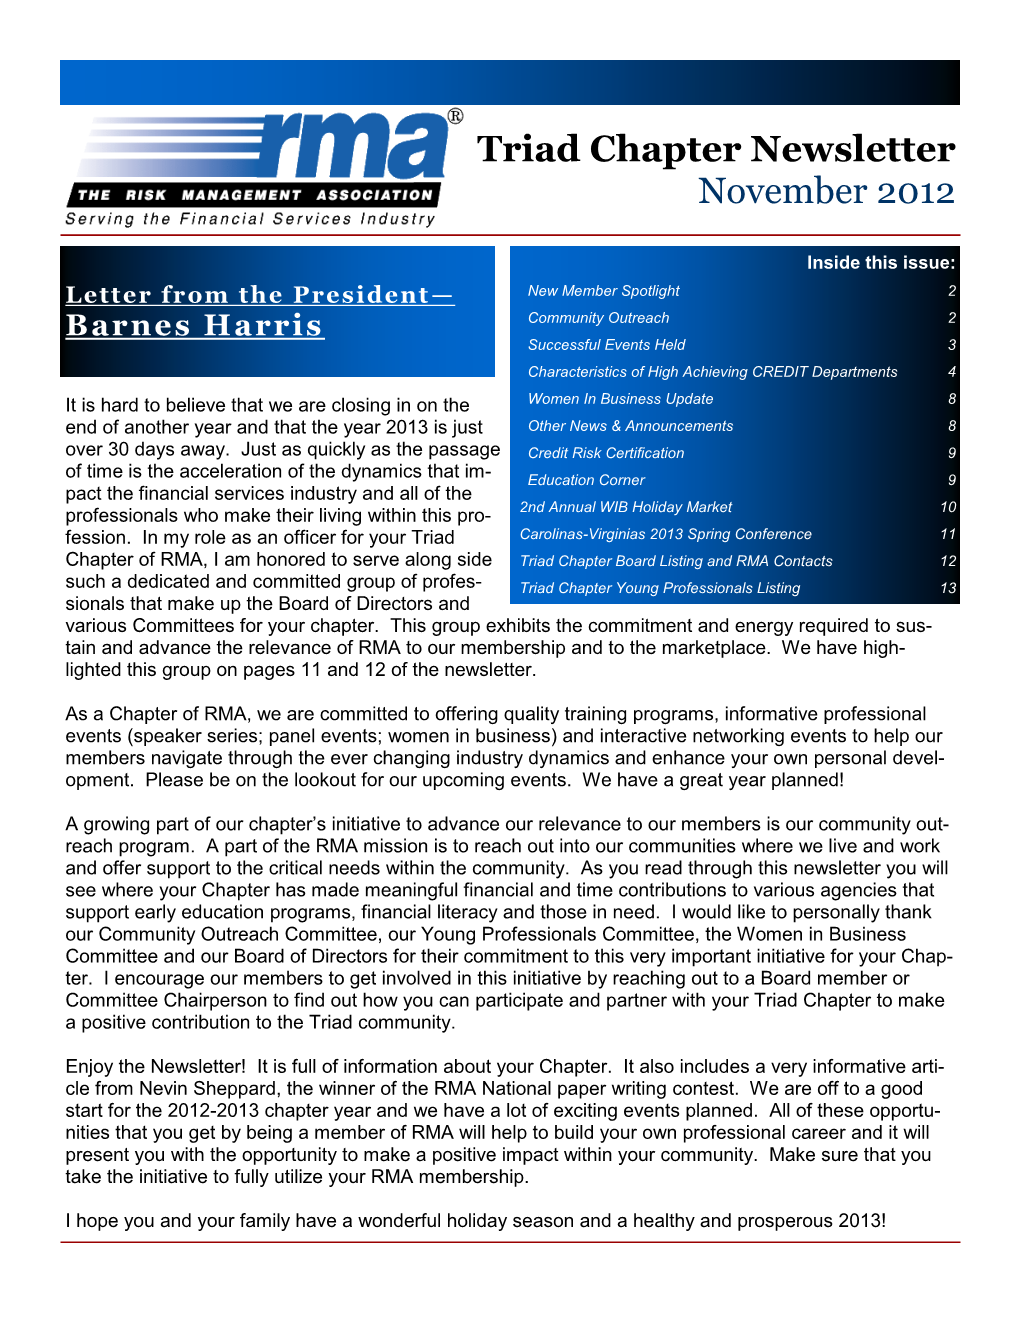 Triad Chapter Newsletter November 2012